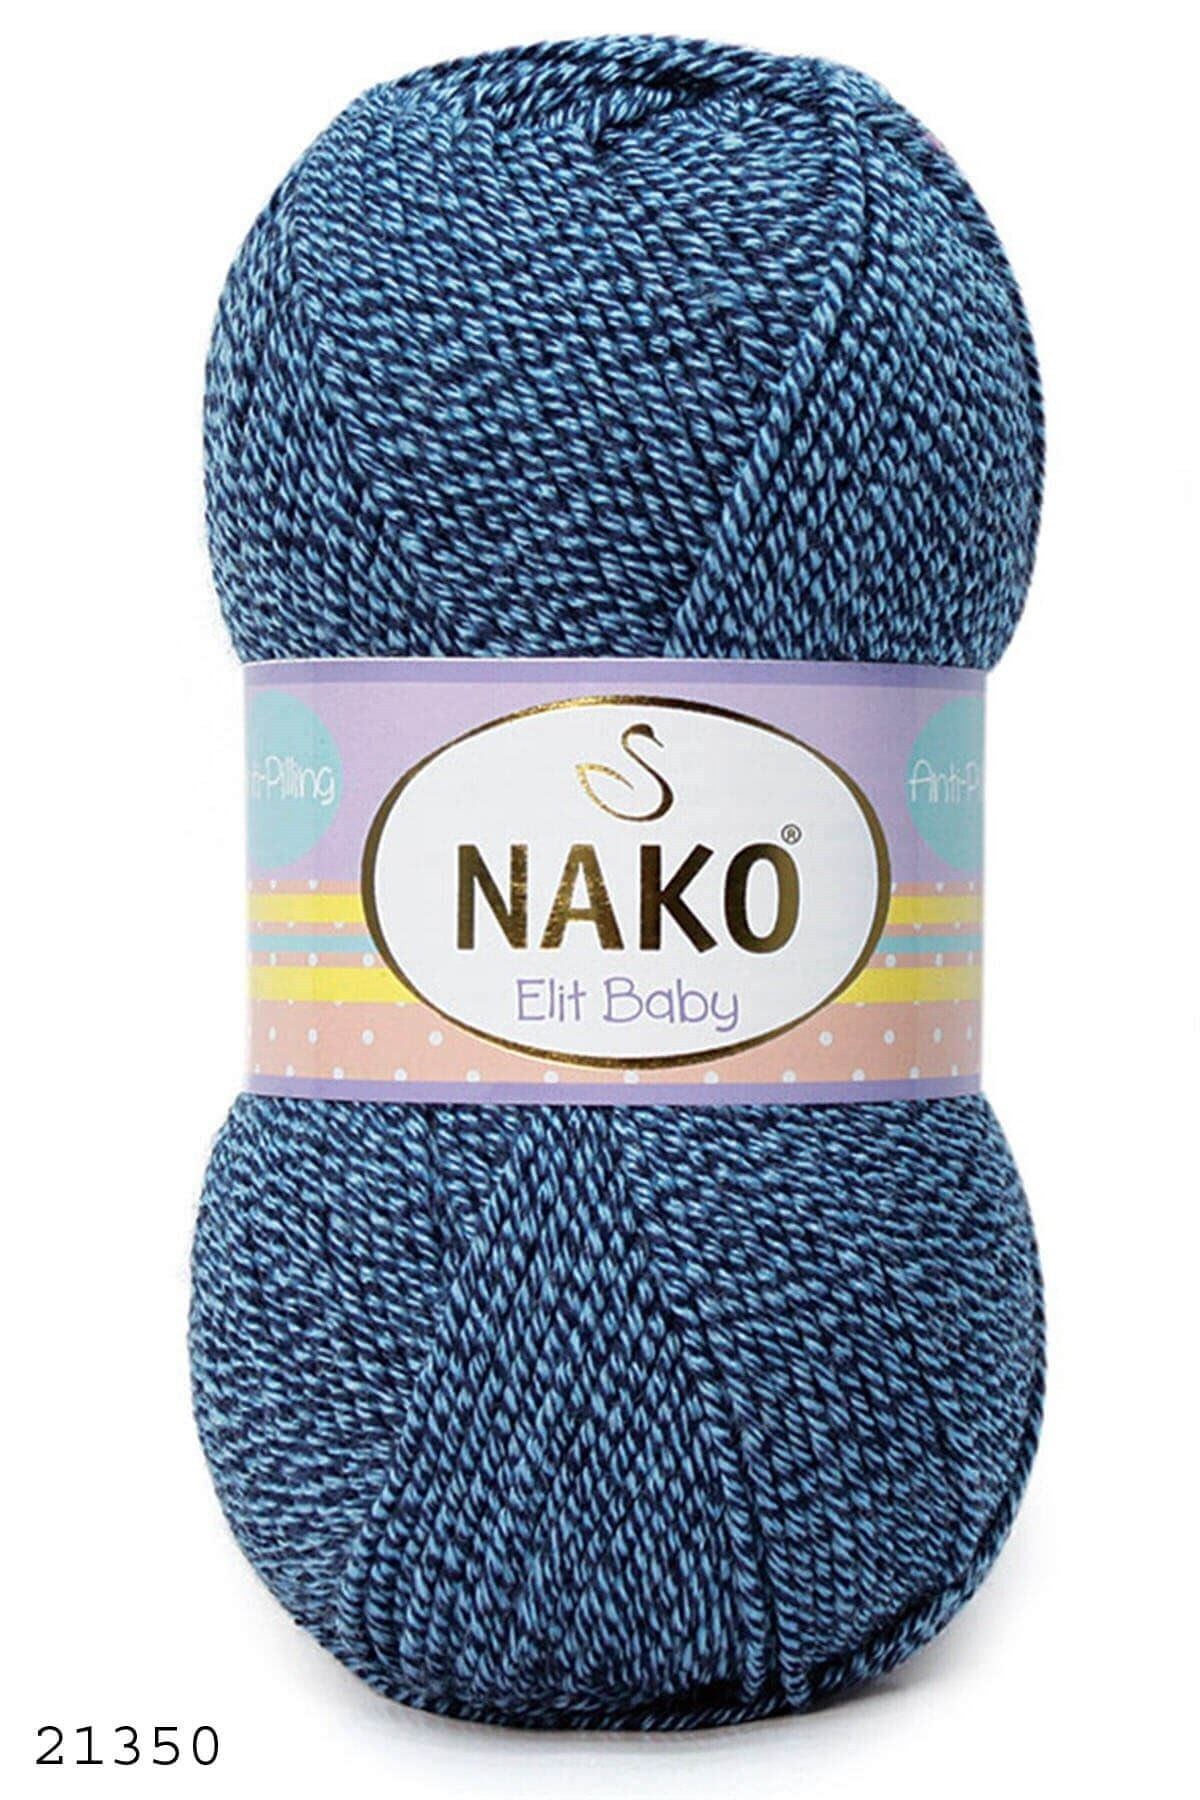 Nako Elit Baby (anti-pilling) El Örgü Ipi Ipliği Yünü Renk Kodu:21350 Mavi Lacivert Muline